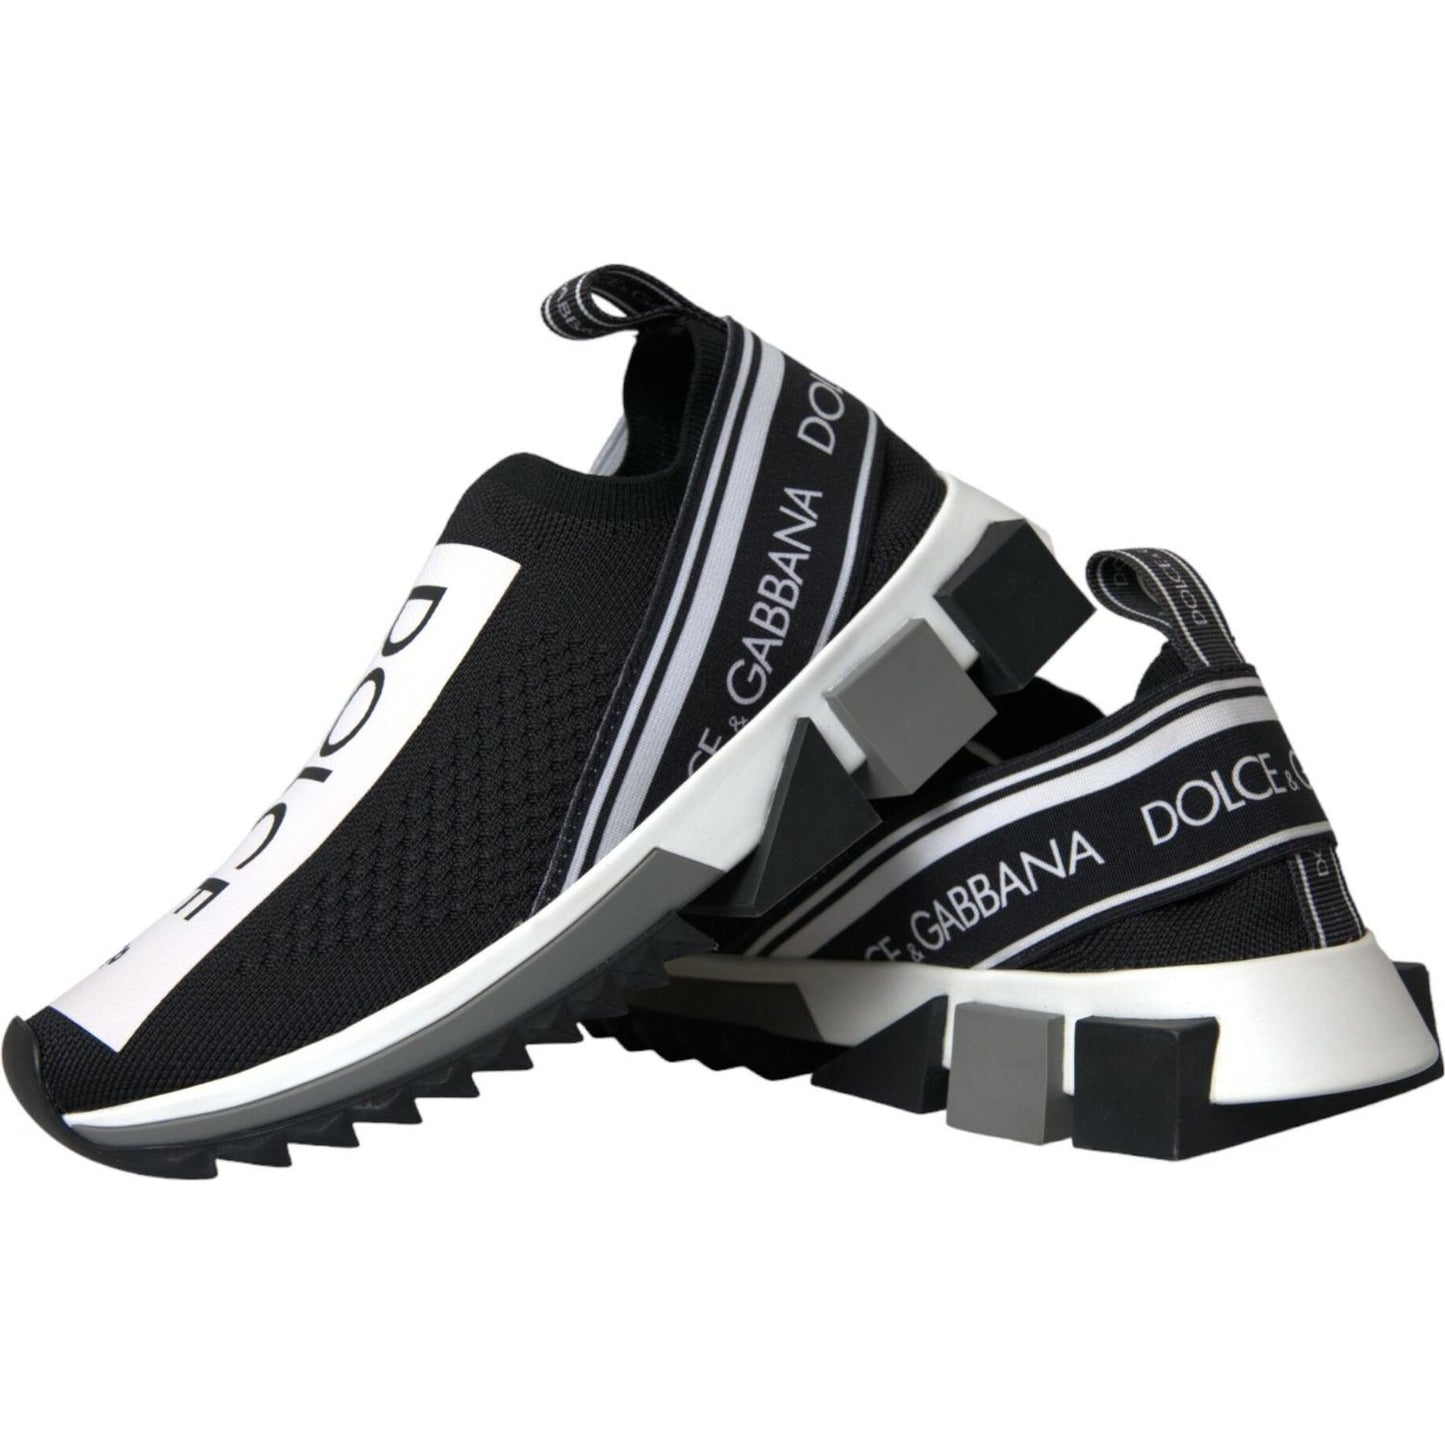 Dolce & Gabbana Black White Slip On Sorrento Sneakers Shoes black-white-slip-on-sorrento-sneakers-shoes